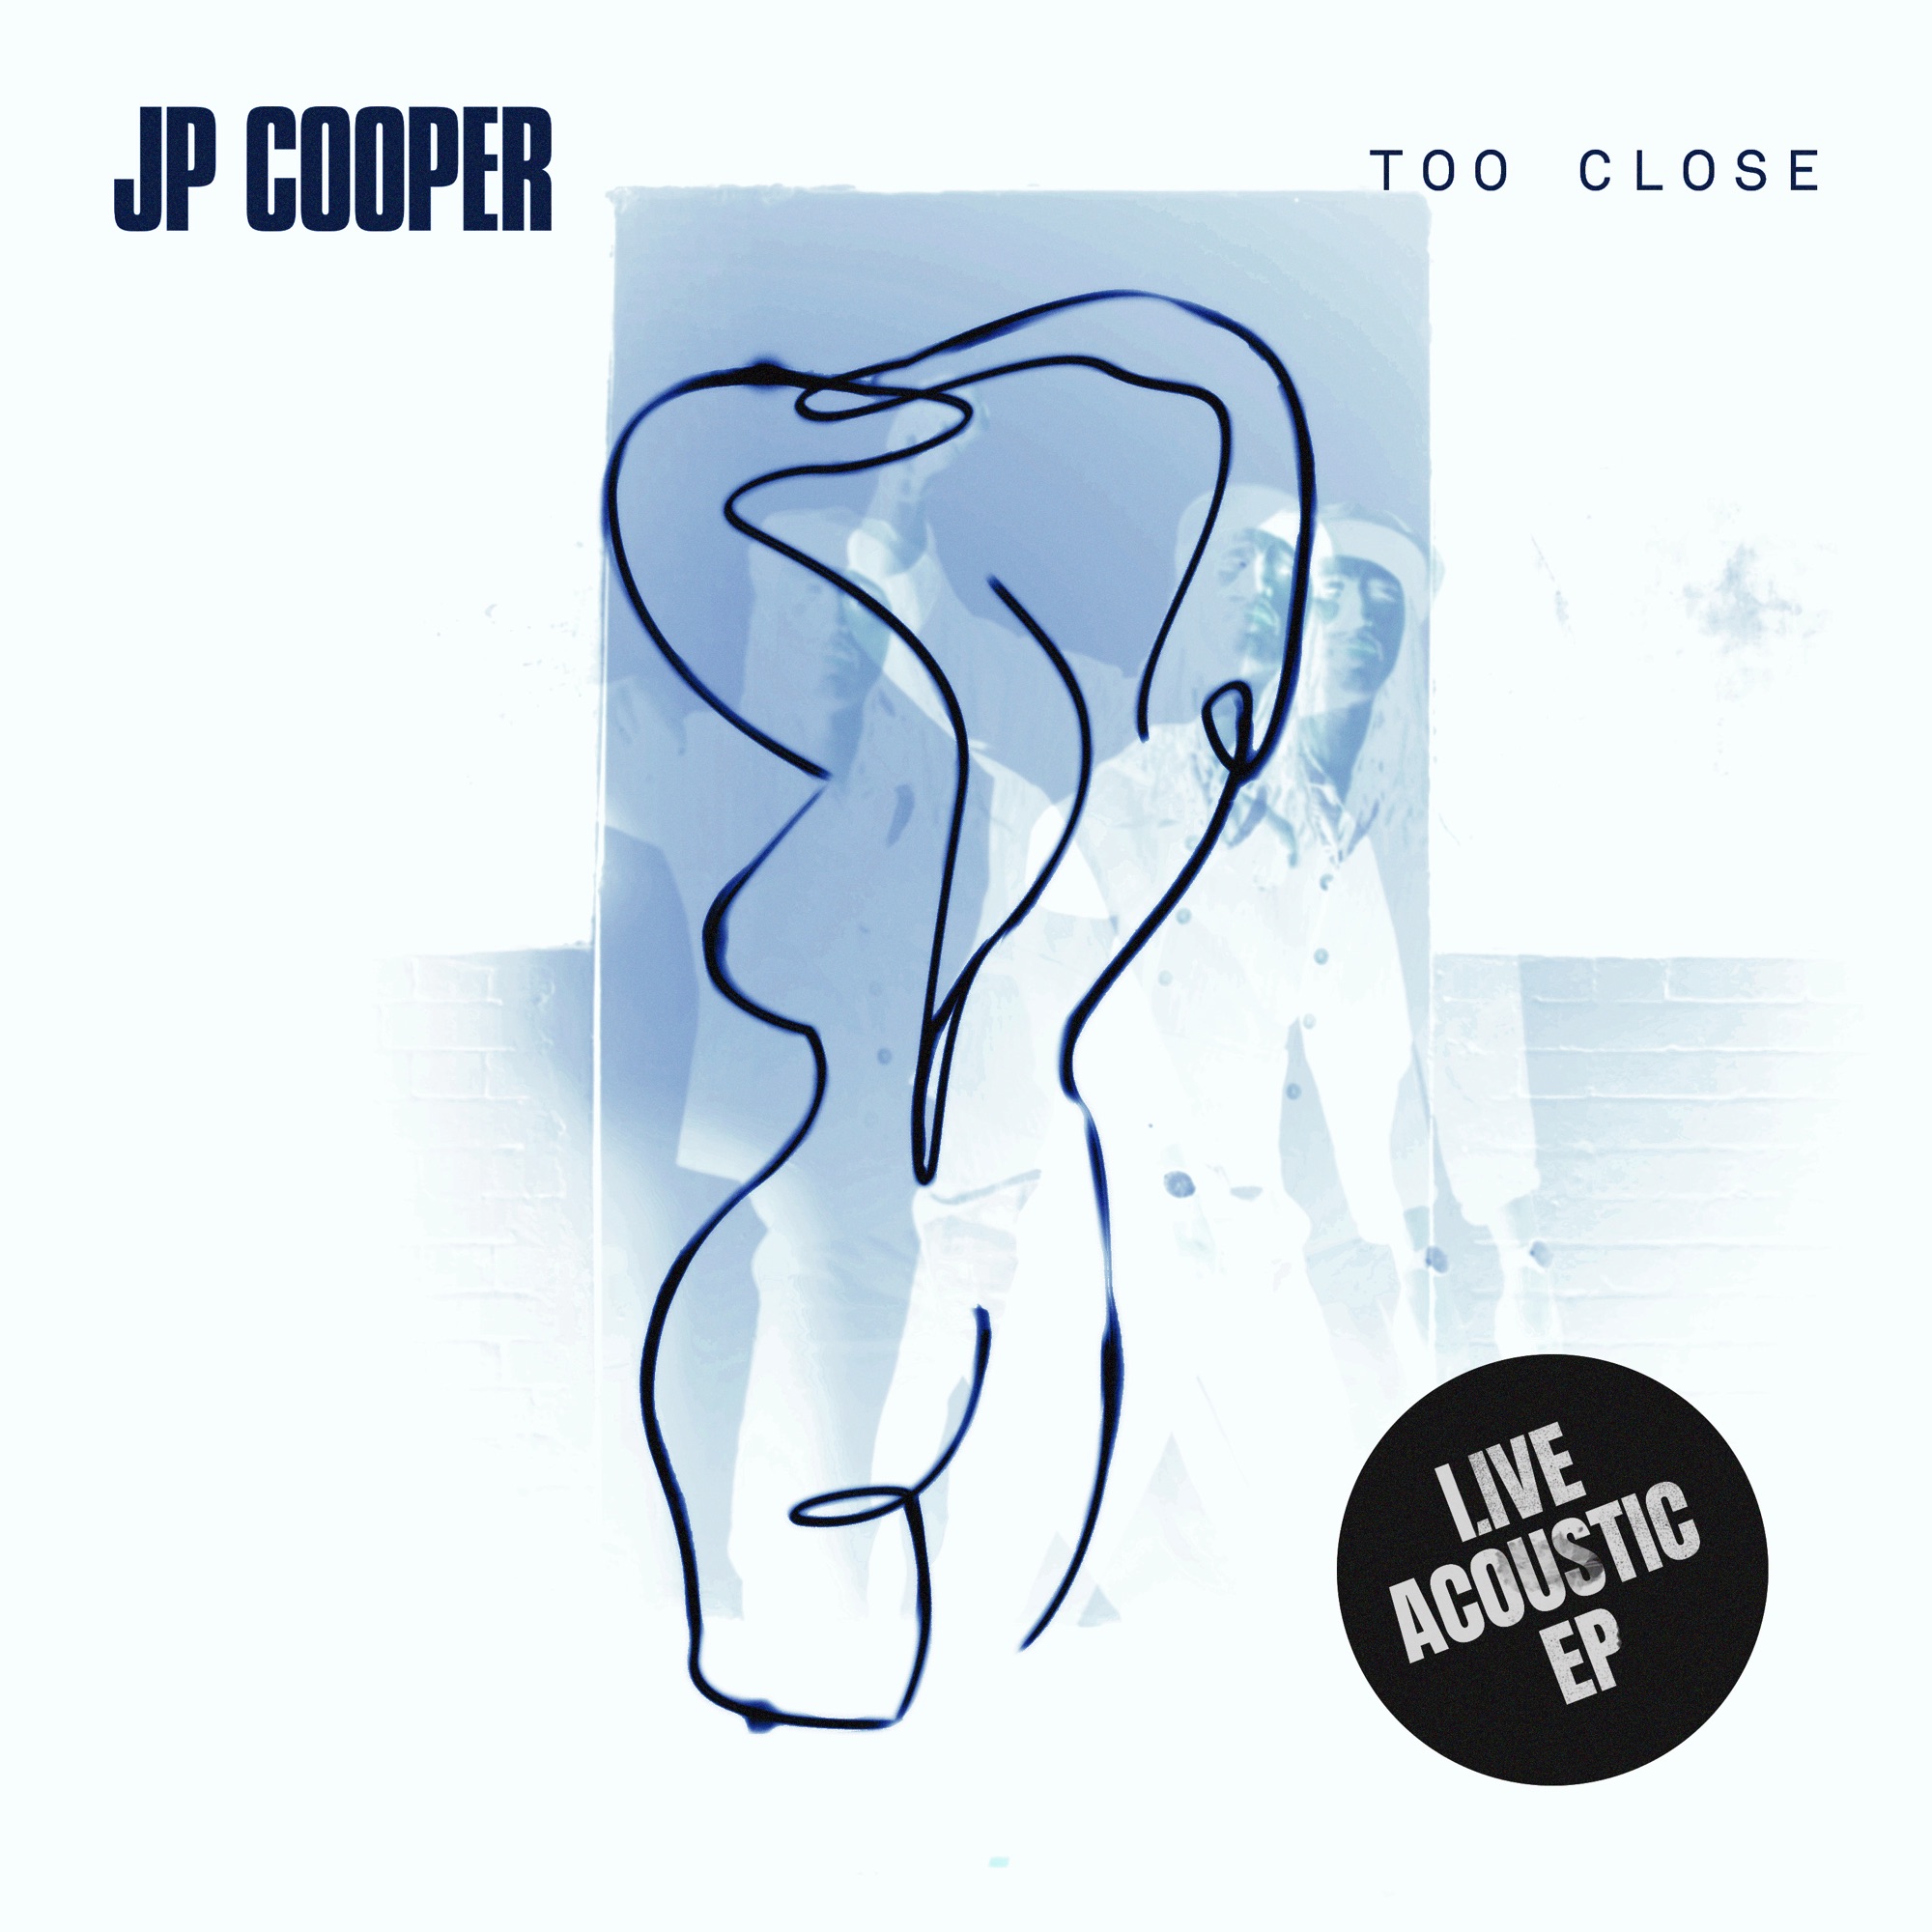 JP Cooper - Too Close (Live Acoustic) - EP